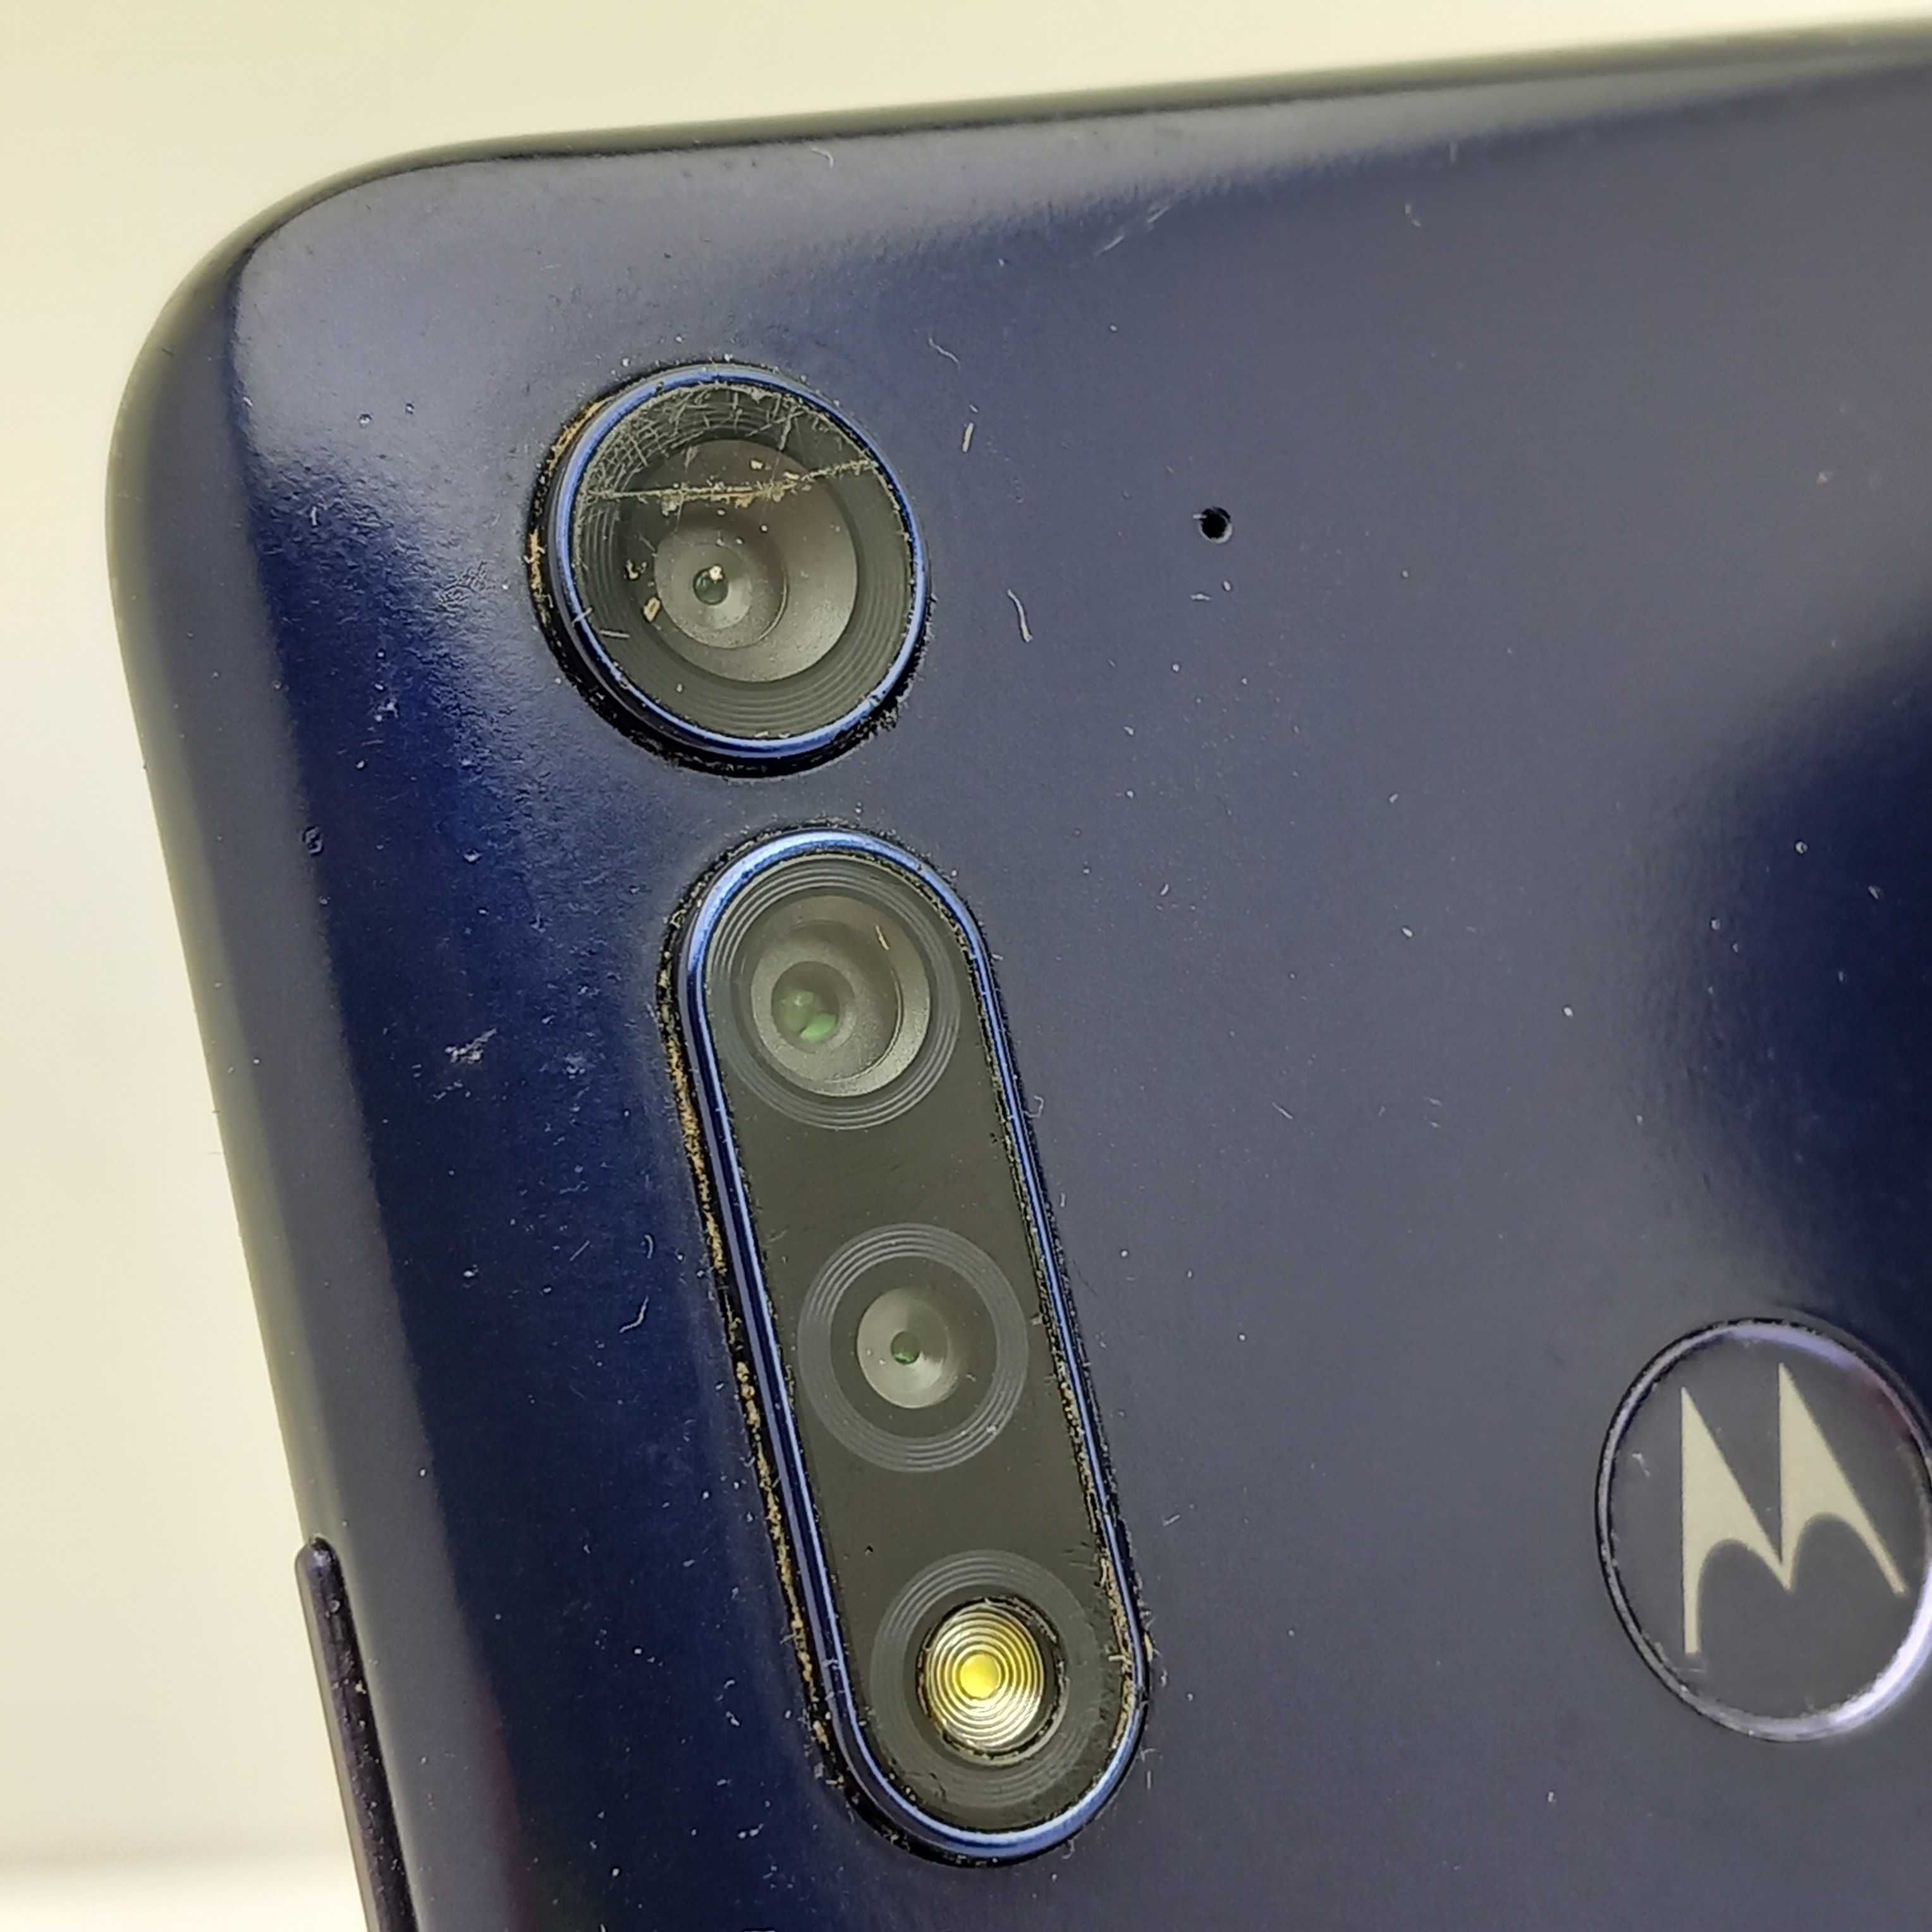 Smartfon Motorola Moto G8 Power 4 GB / 64 GB 4G (LTE) niebieski